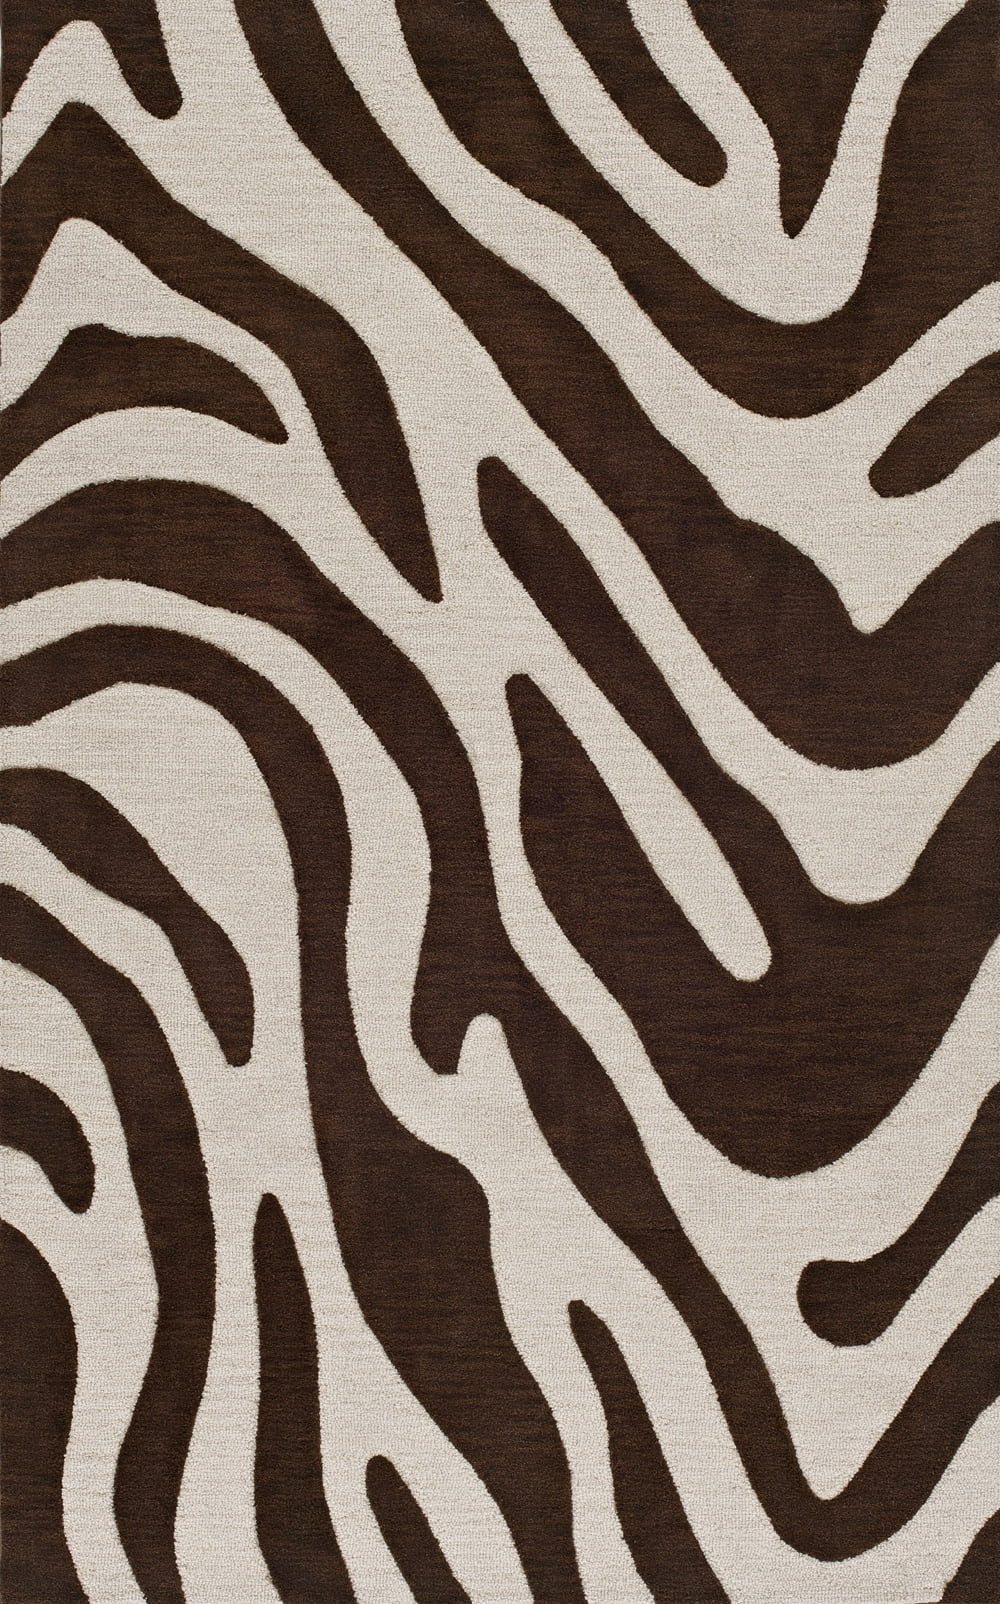 Turkish Quality Rug Expo Zebra Animal Printed Rugs 8x10 7'10'' x 10'6'' 